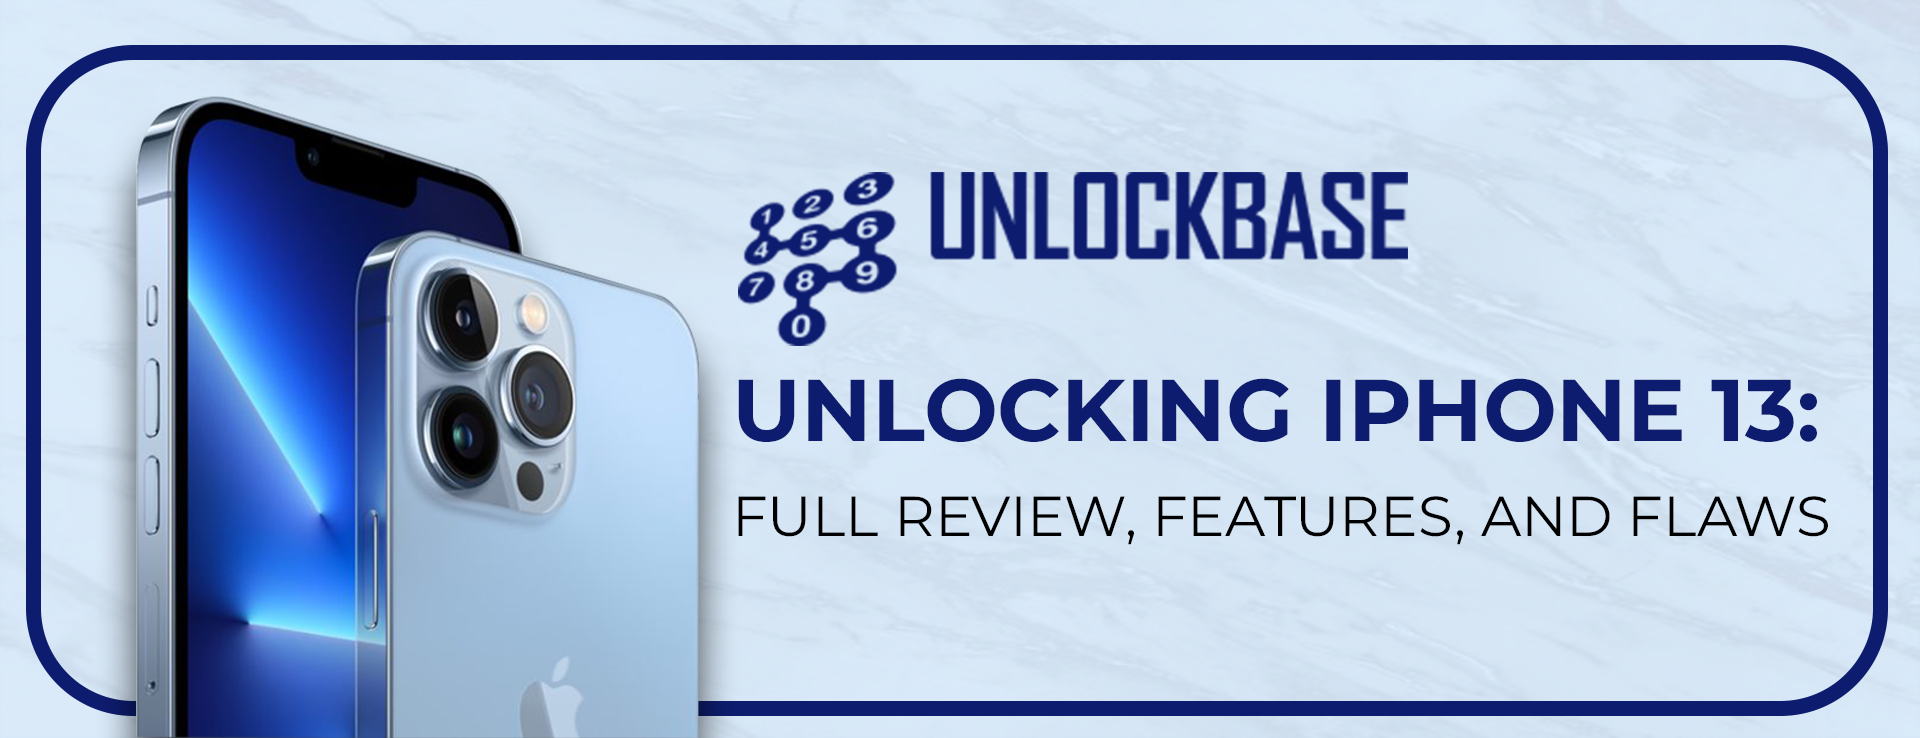 unlockbase review